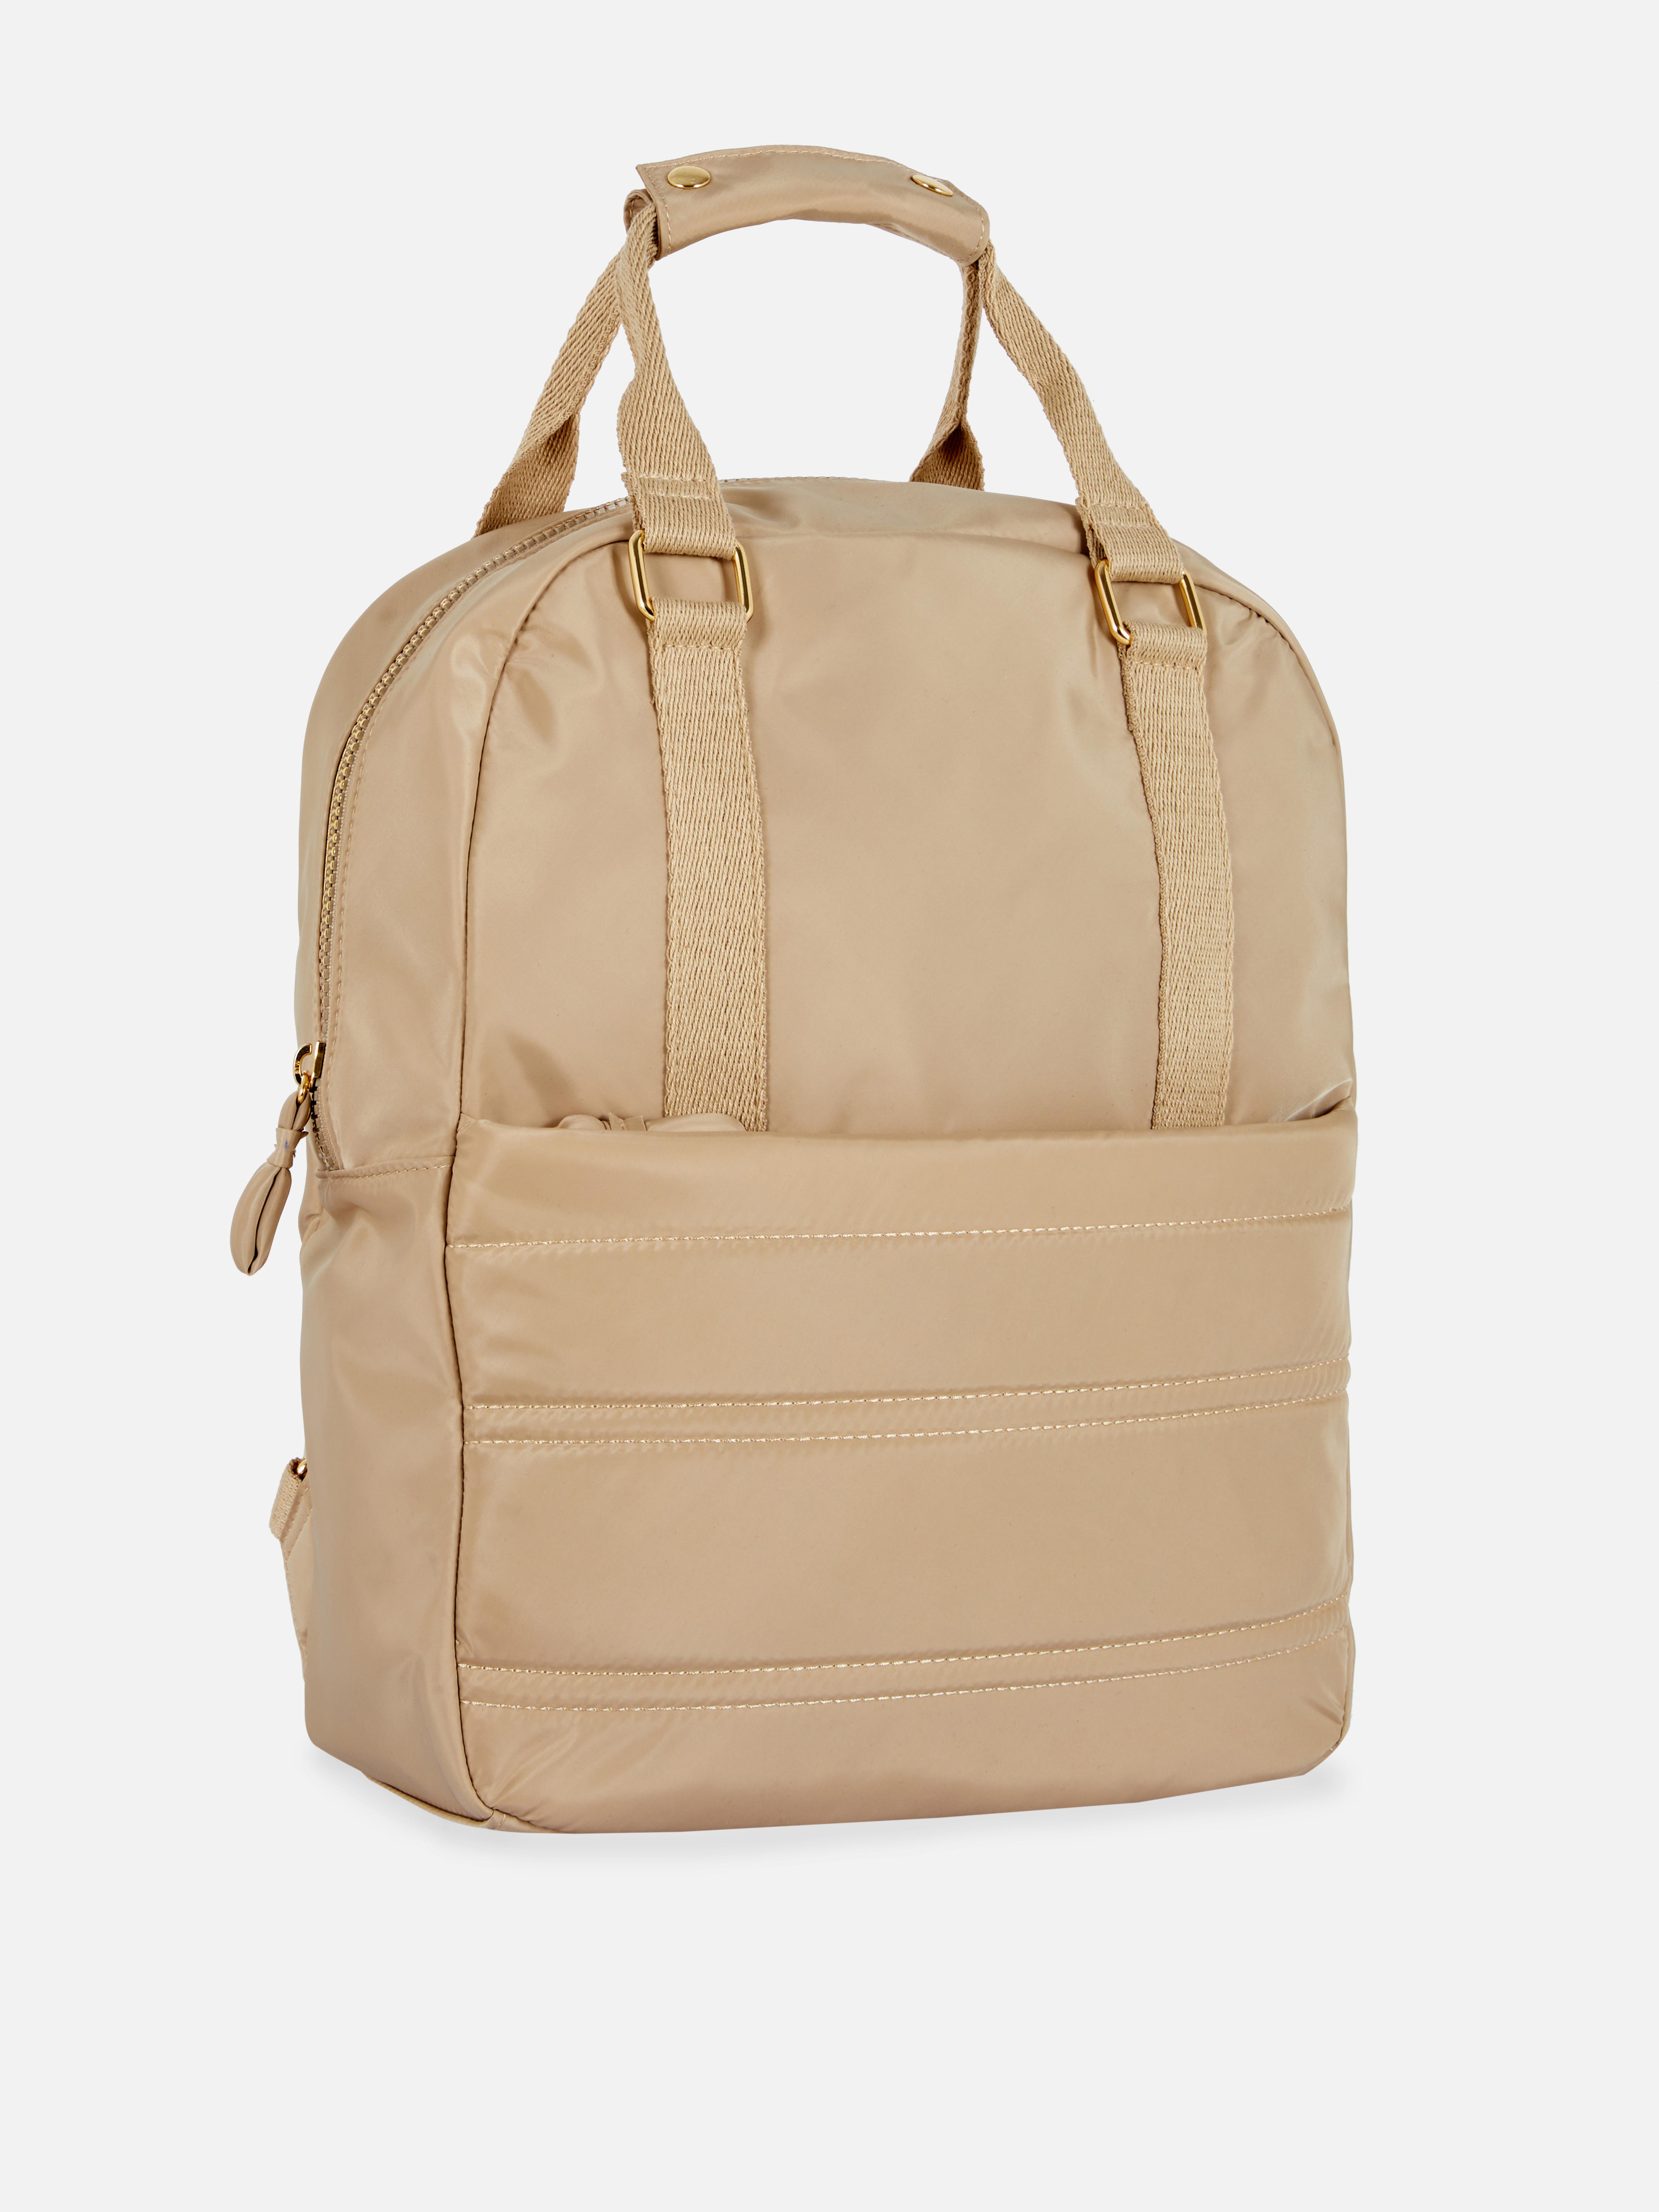 Top Handle Duffle Bag